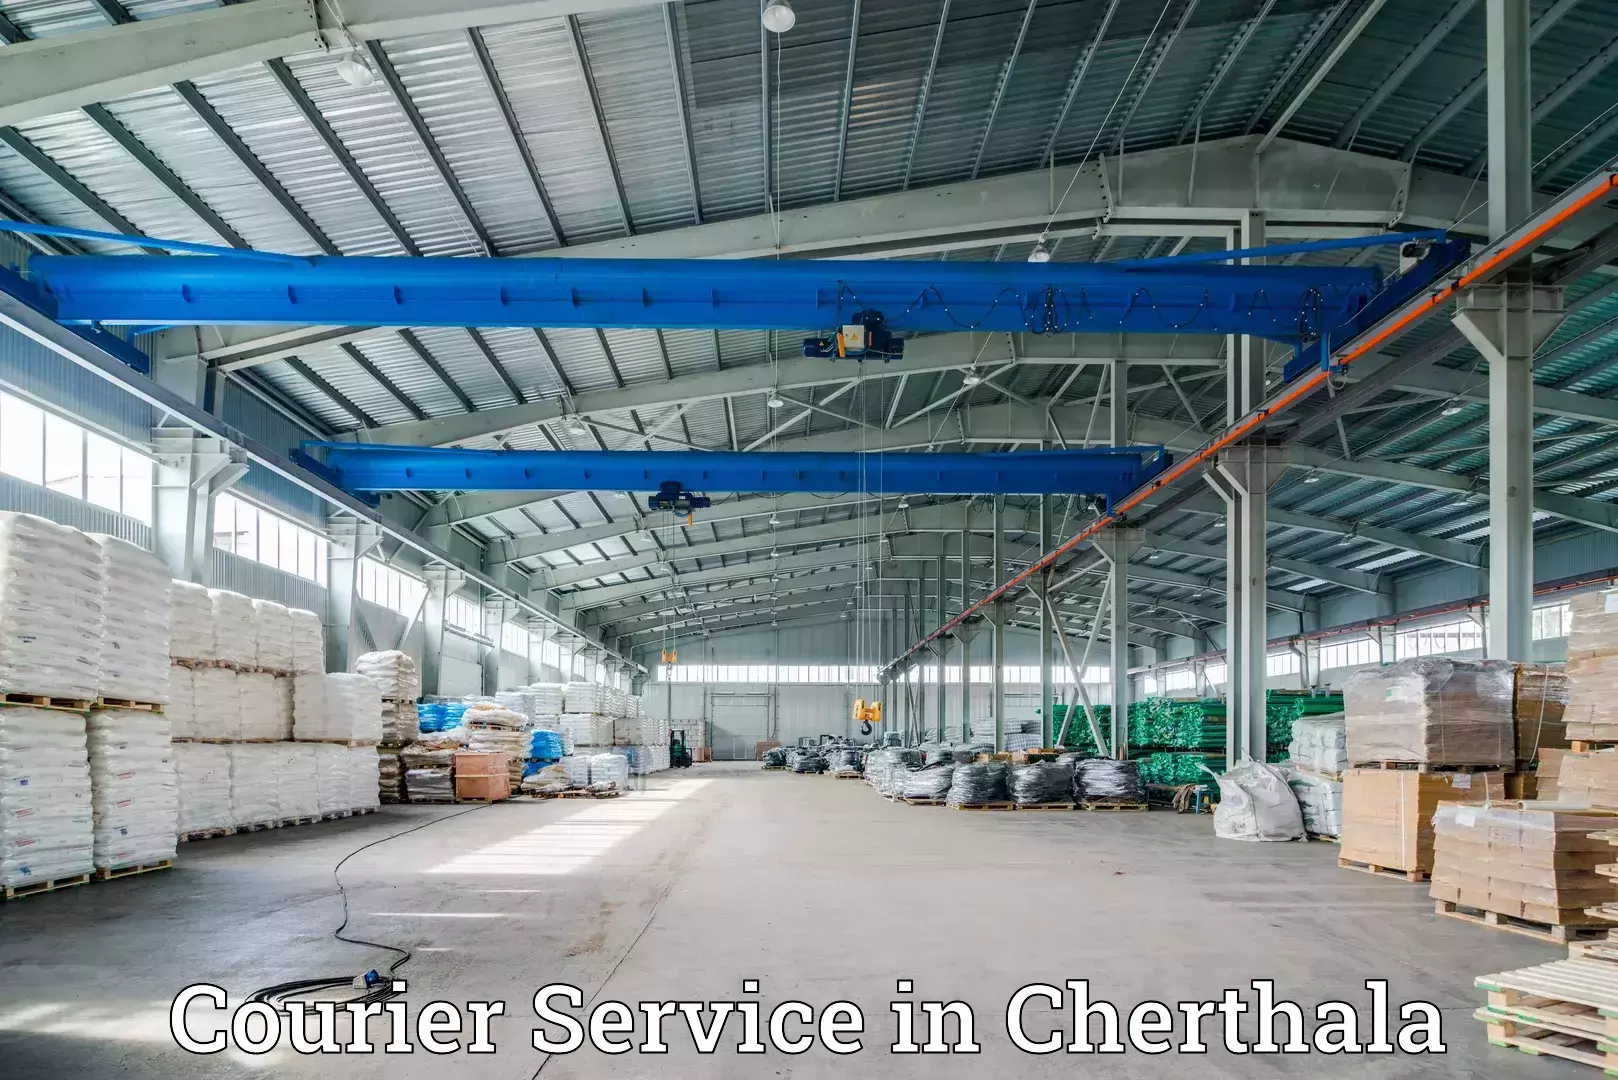 Efficient order fulfillment in Cherthala